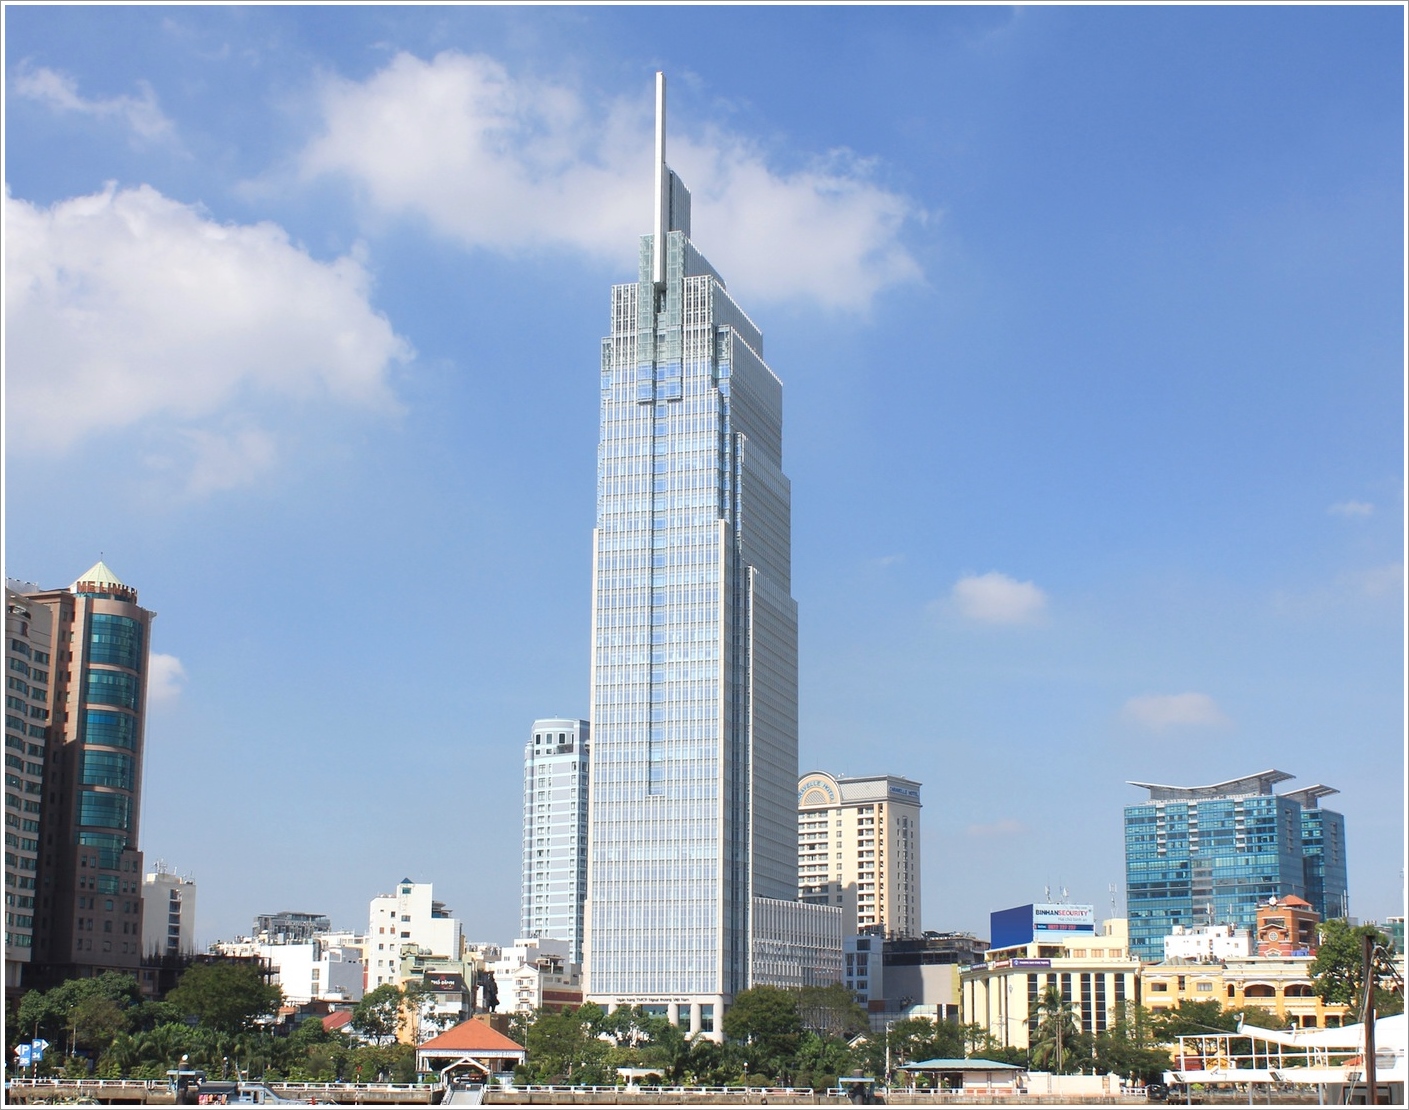 vietcombank-tower-cong-truong-me-linh-quan-1-van-phong-cho-thue-tphcm-5real.vn-01